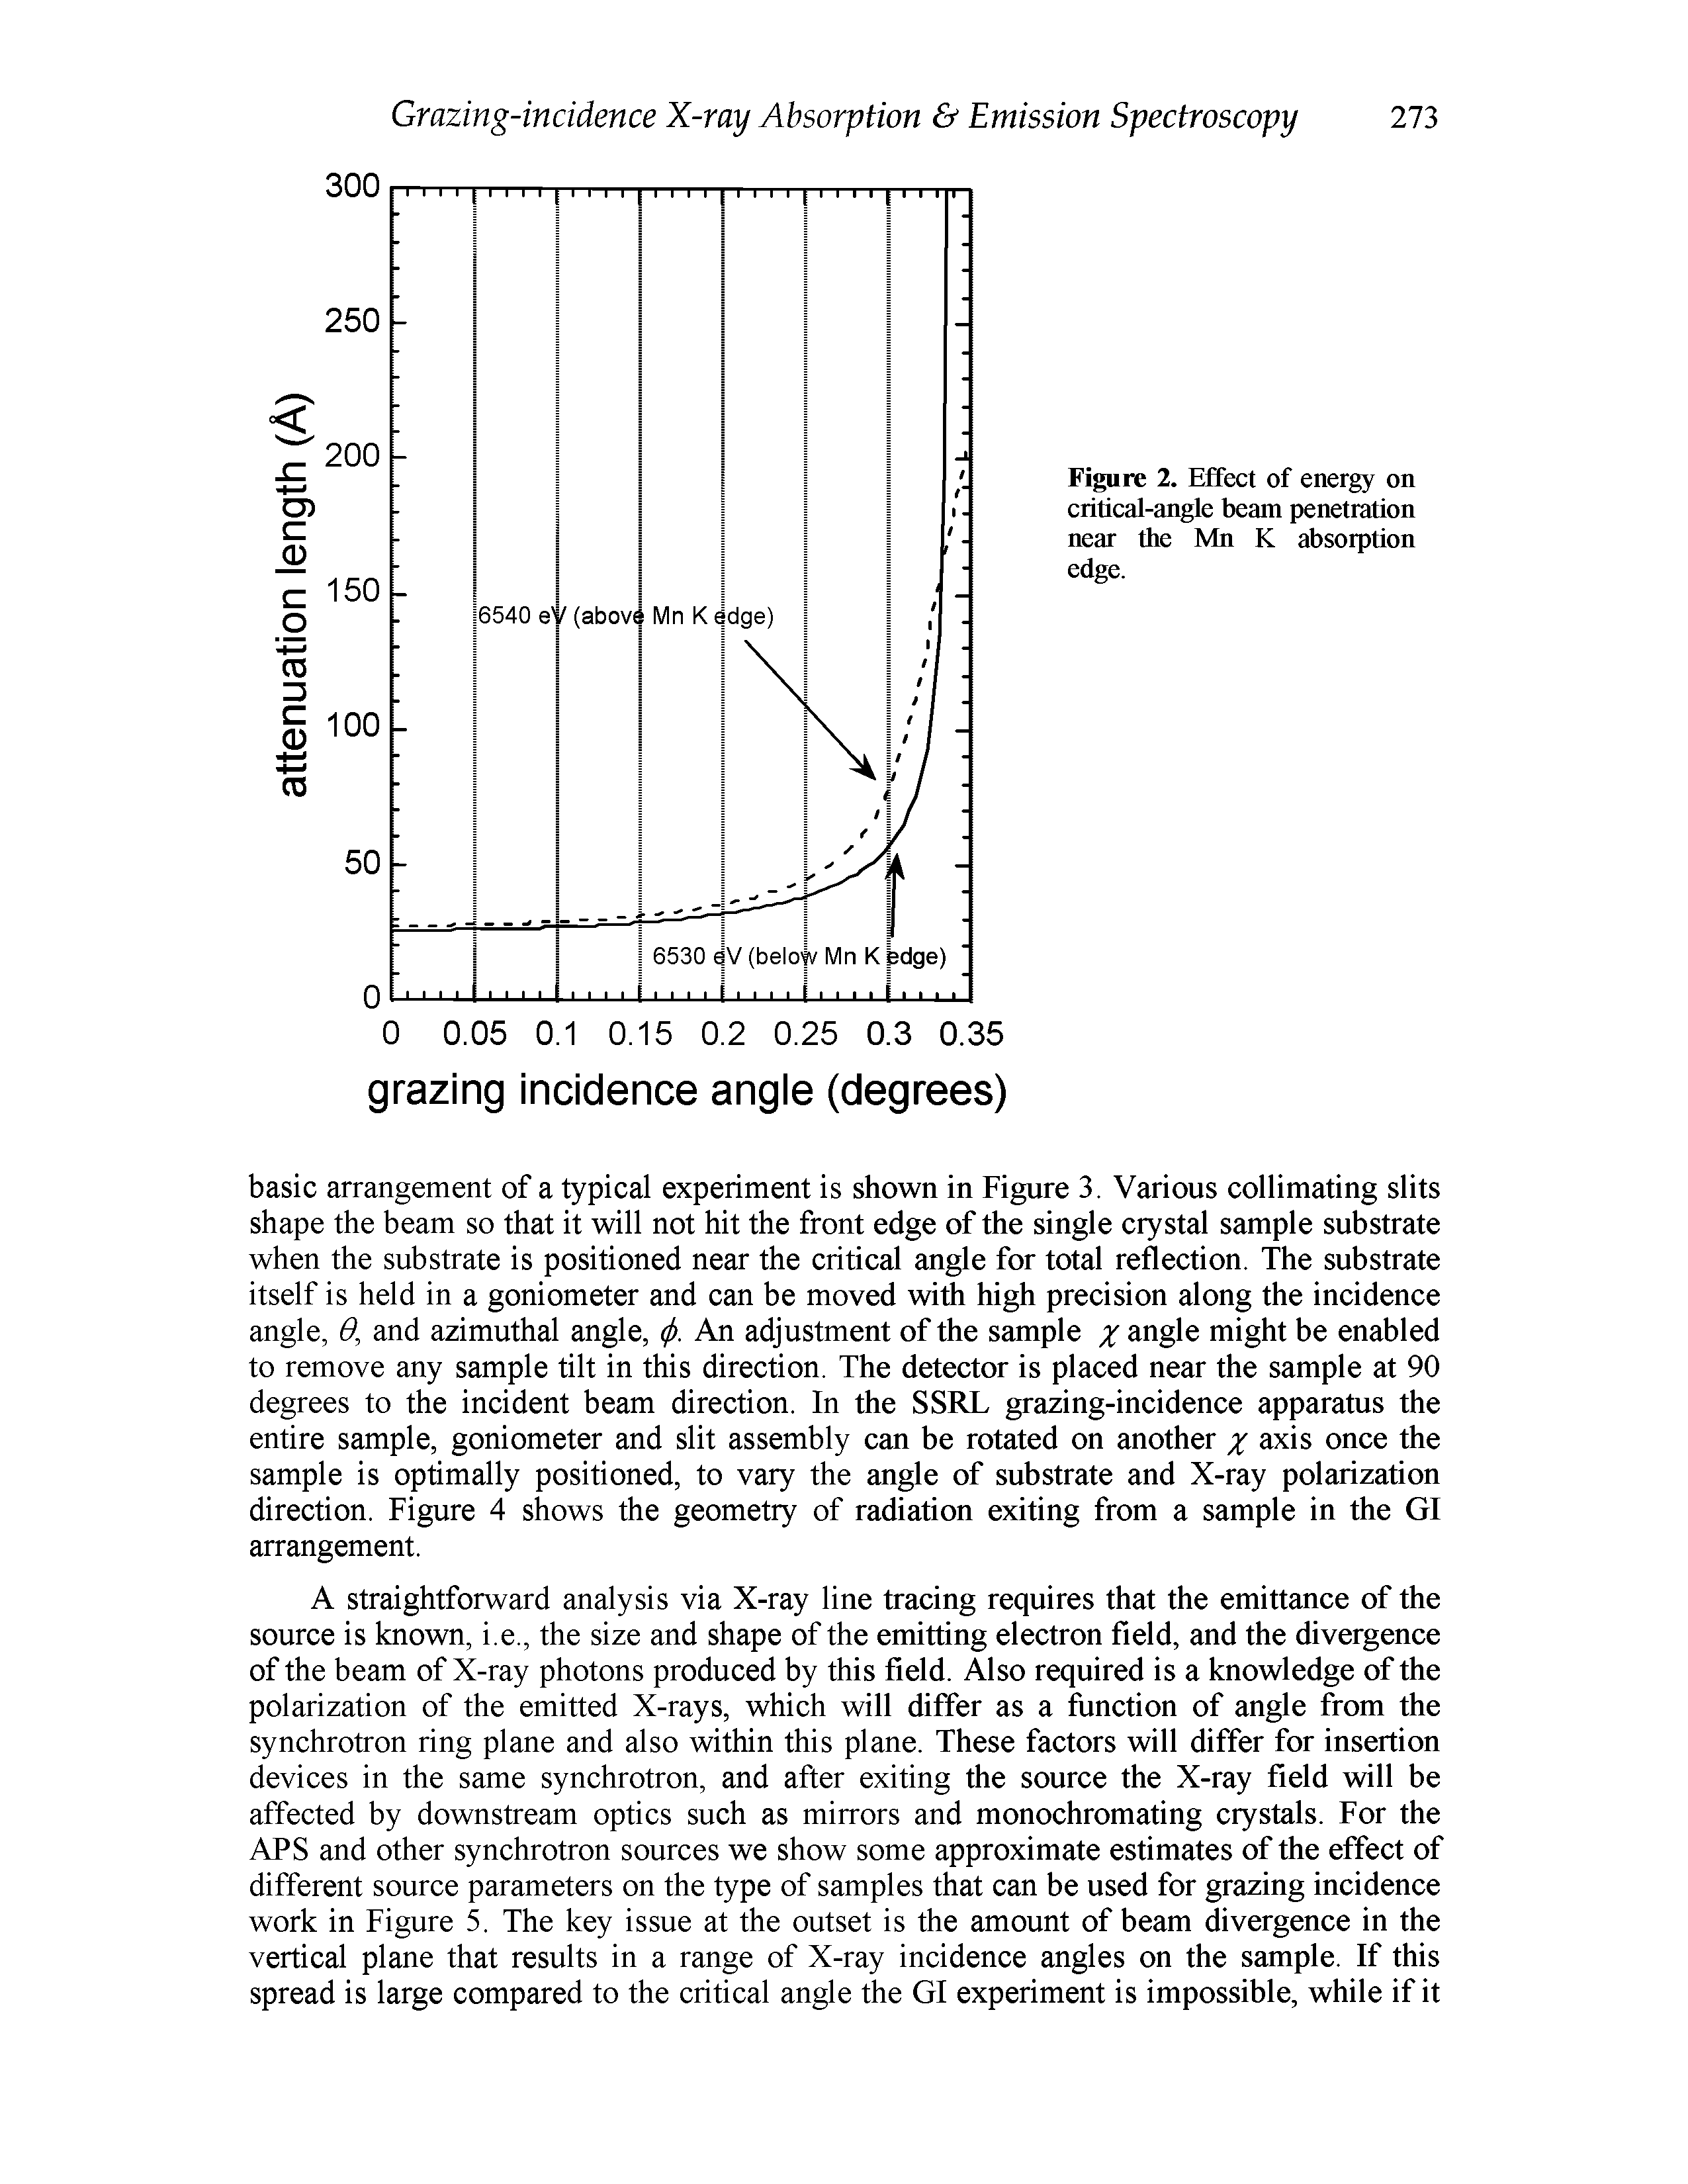 Figure 2. Effect of energy on critical-angle beam penetration near the Mn absorption edge.